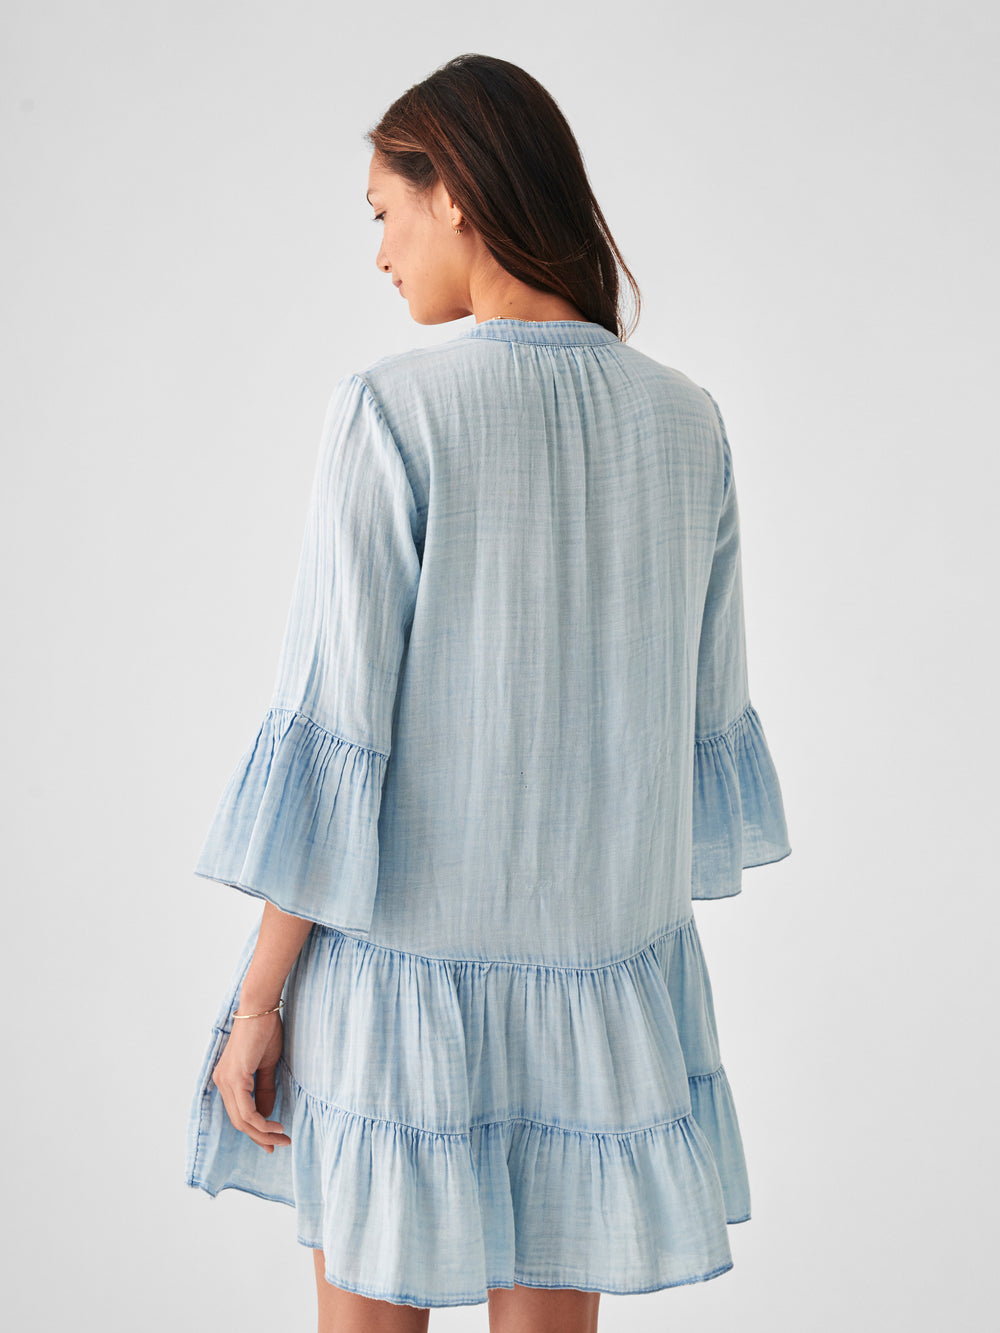 Faherty Dream Cotton Gauze Kasey Dress-Light Indigo Wash